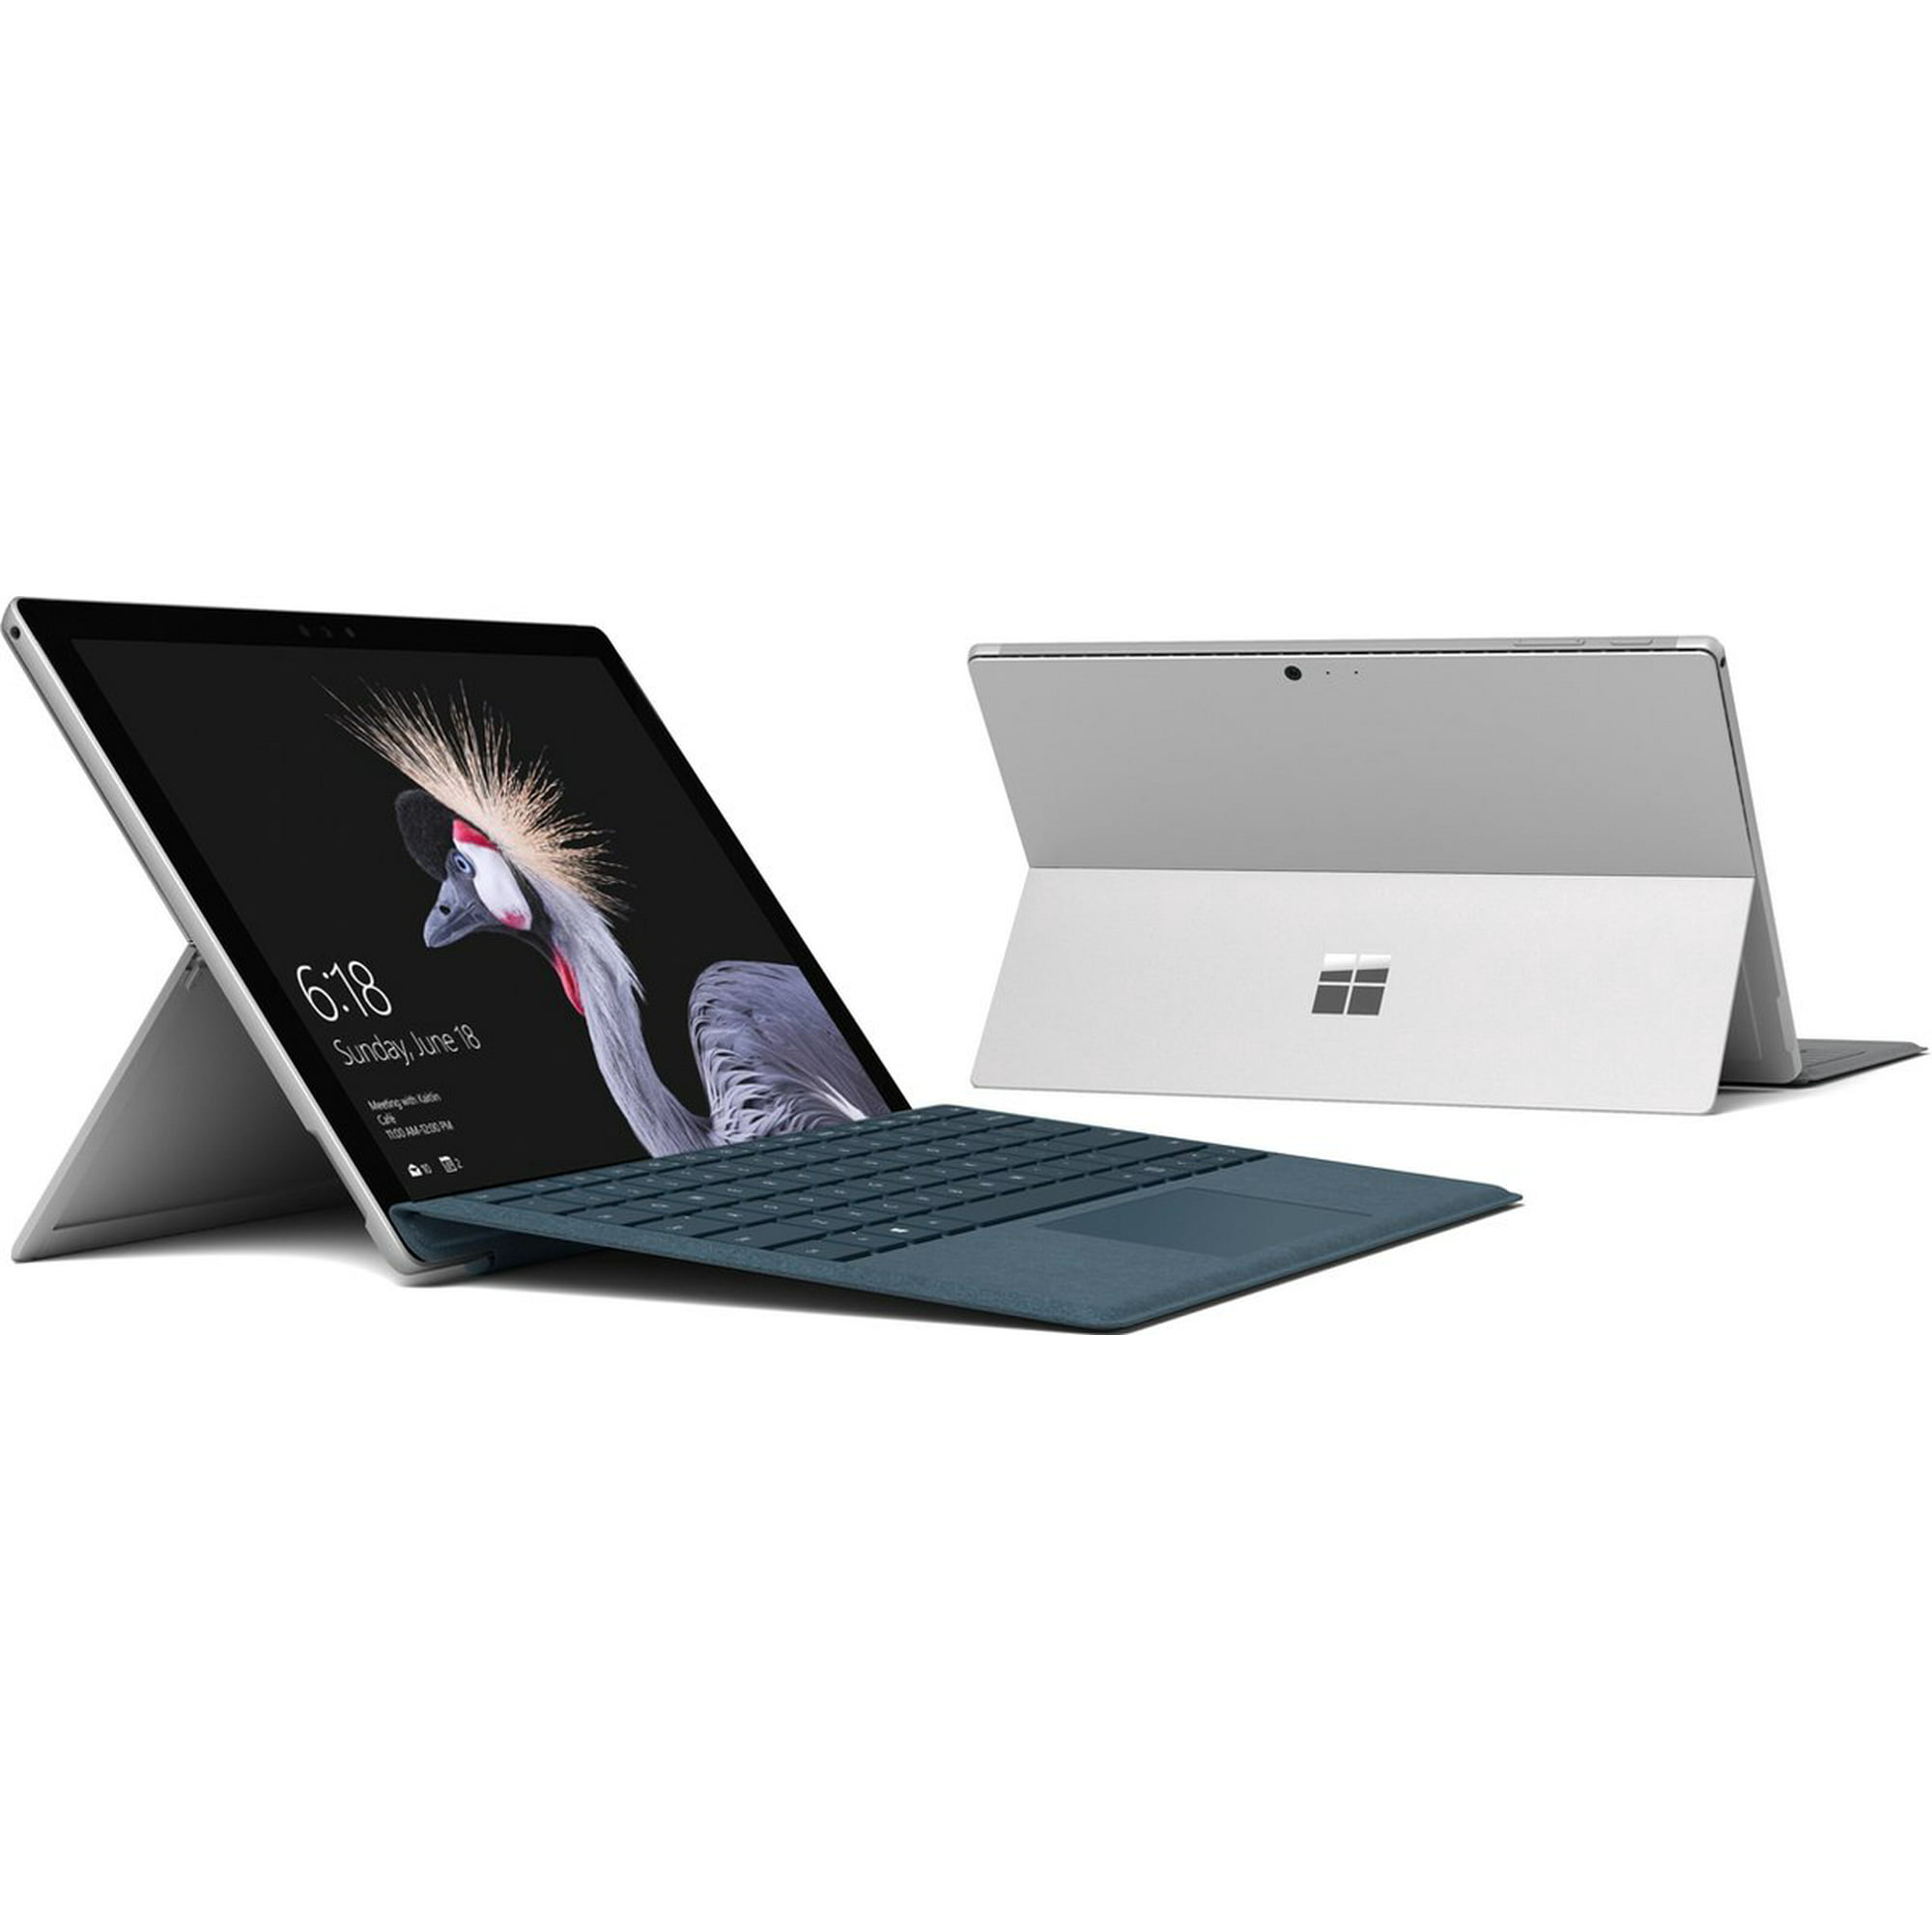 Microsoft Surface Pro 4 Touchscreen Laptop Intel Core i5-6300U 2.40GHz, RAM 8 GB, 256 GB SSD, GPU: Intel HD Graphics 520 (Used) - image 1 of 3